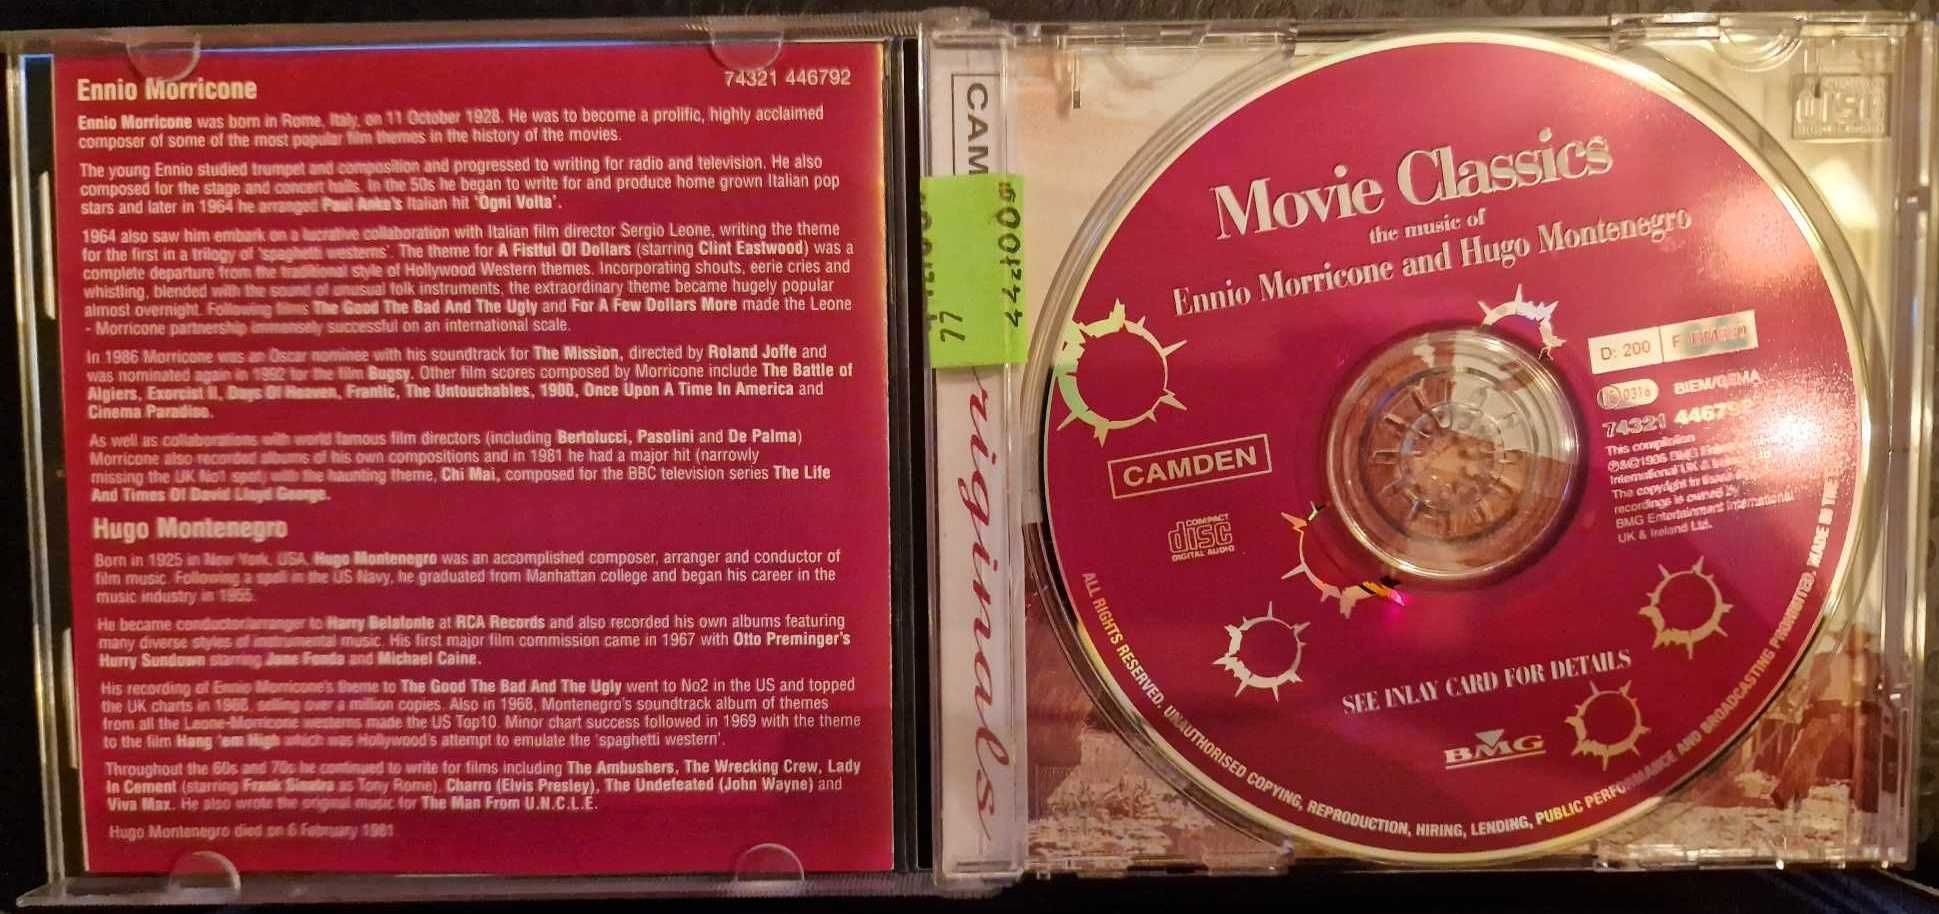 Movie Classics Ennio Morricone And Hugo Montenegro CD Soundtrack OST